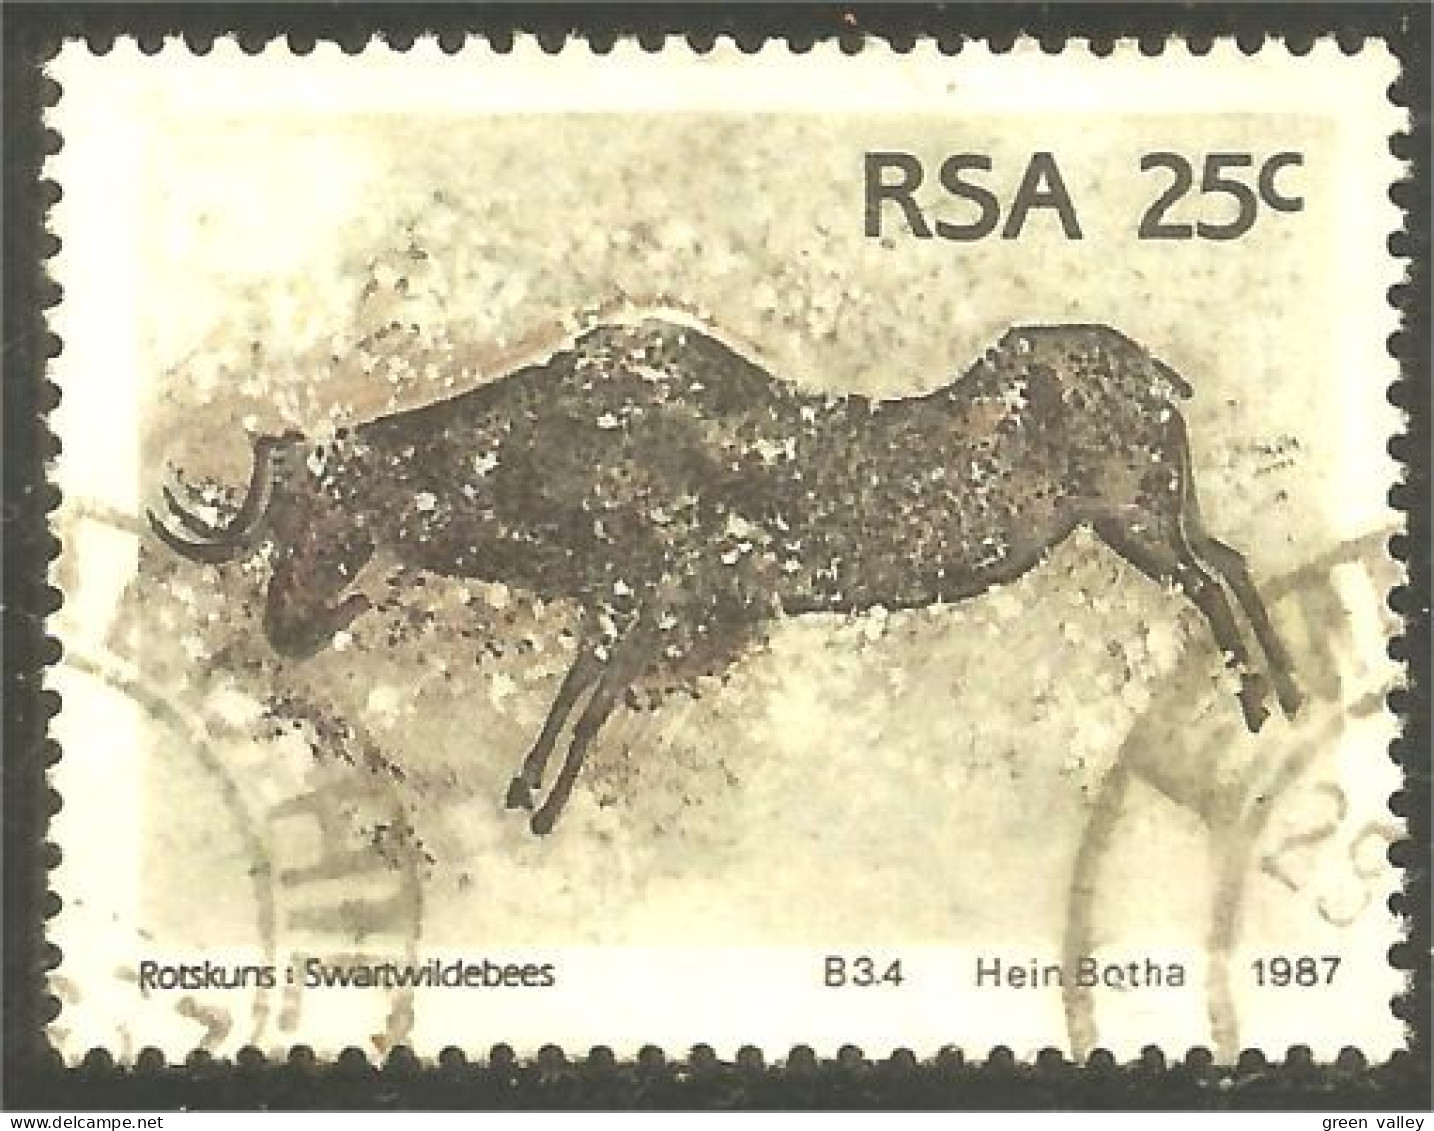 XW01-2158 RSA South Africa Petroglyphs Wild Wildebeest Gnou Peinture Gravure Rupestre Wall Engraving Painting - Gebraucht